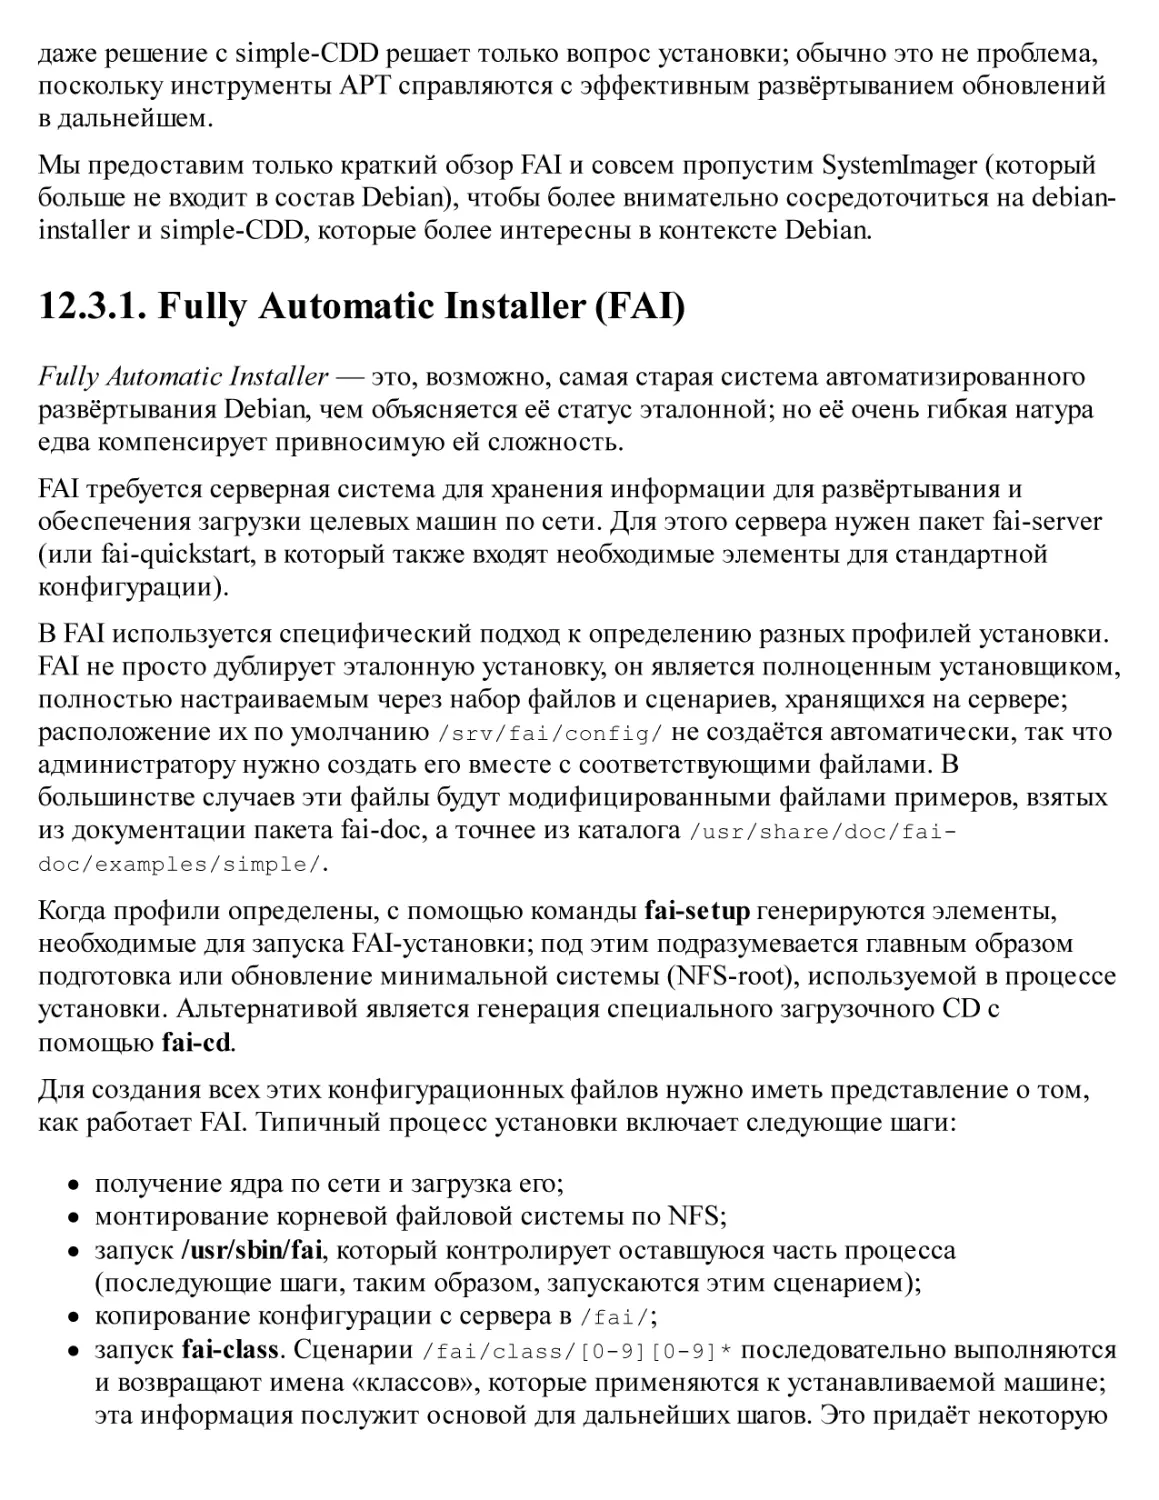 12.3.1. Fully Automatic Installer (FAI)